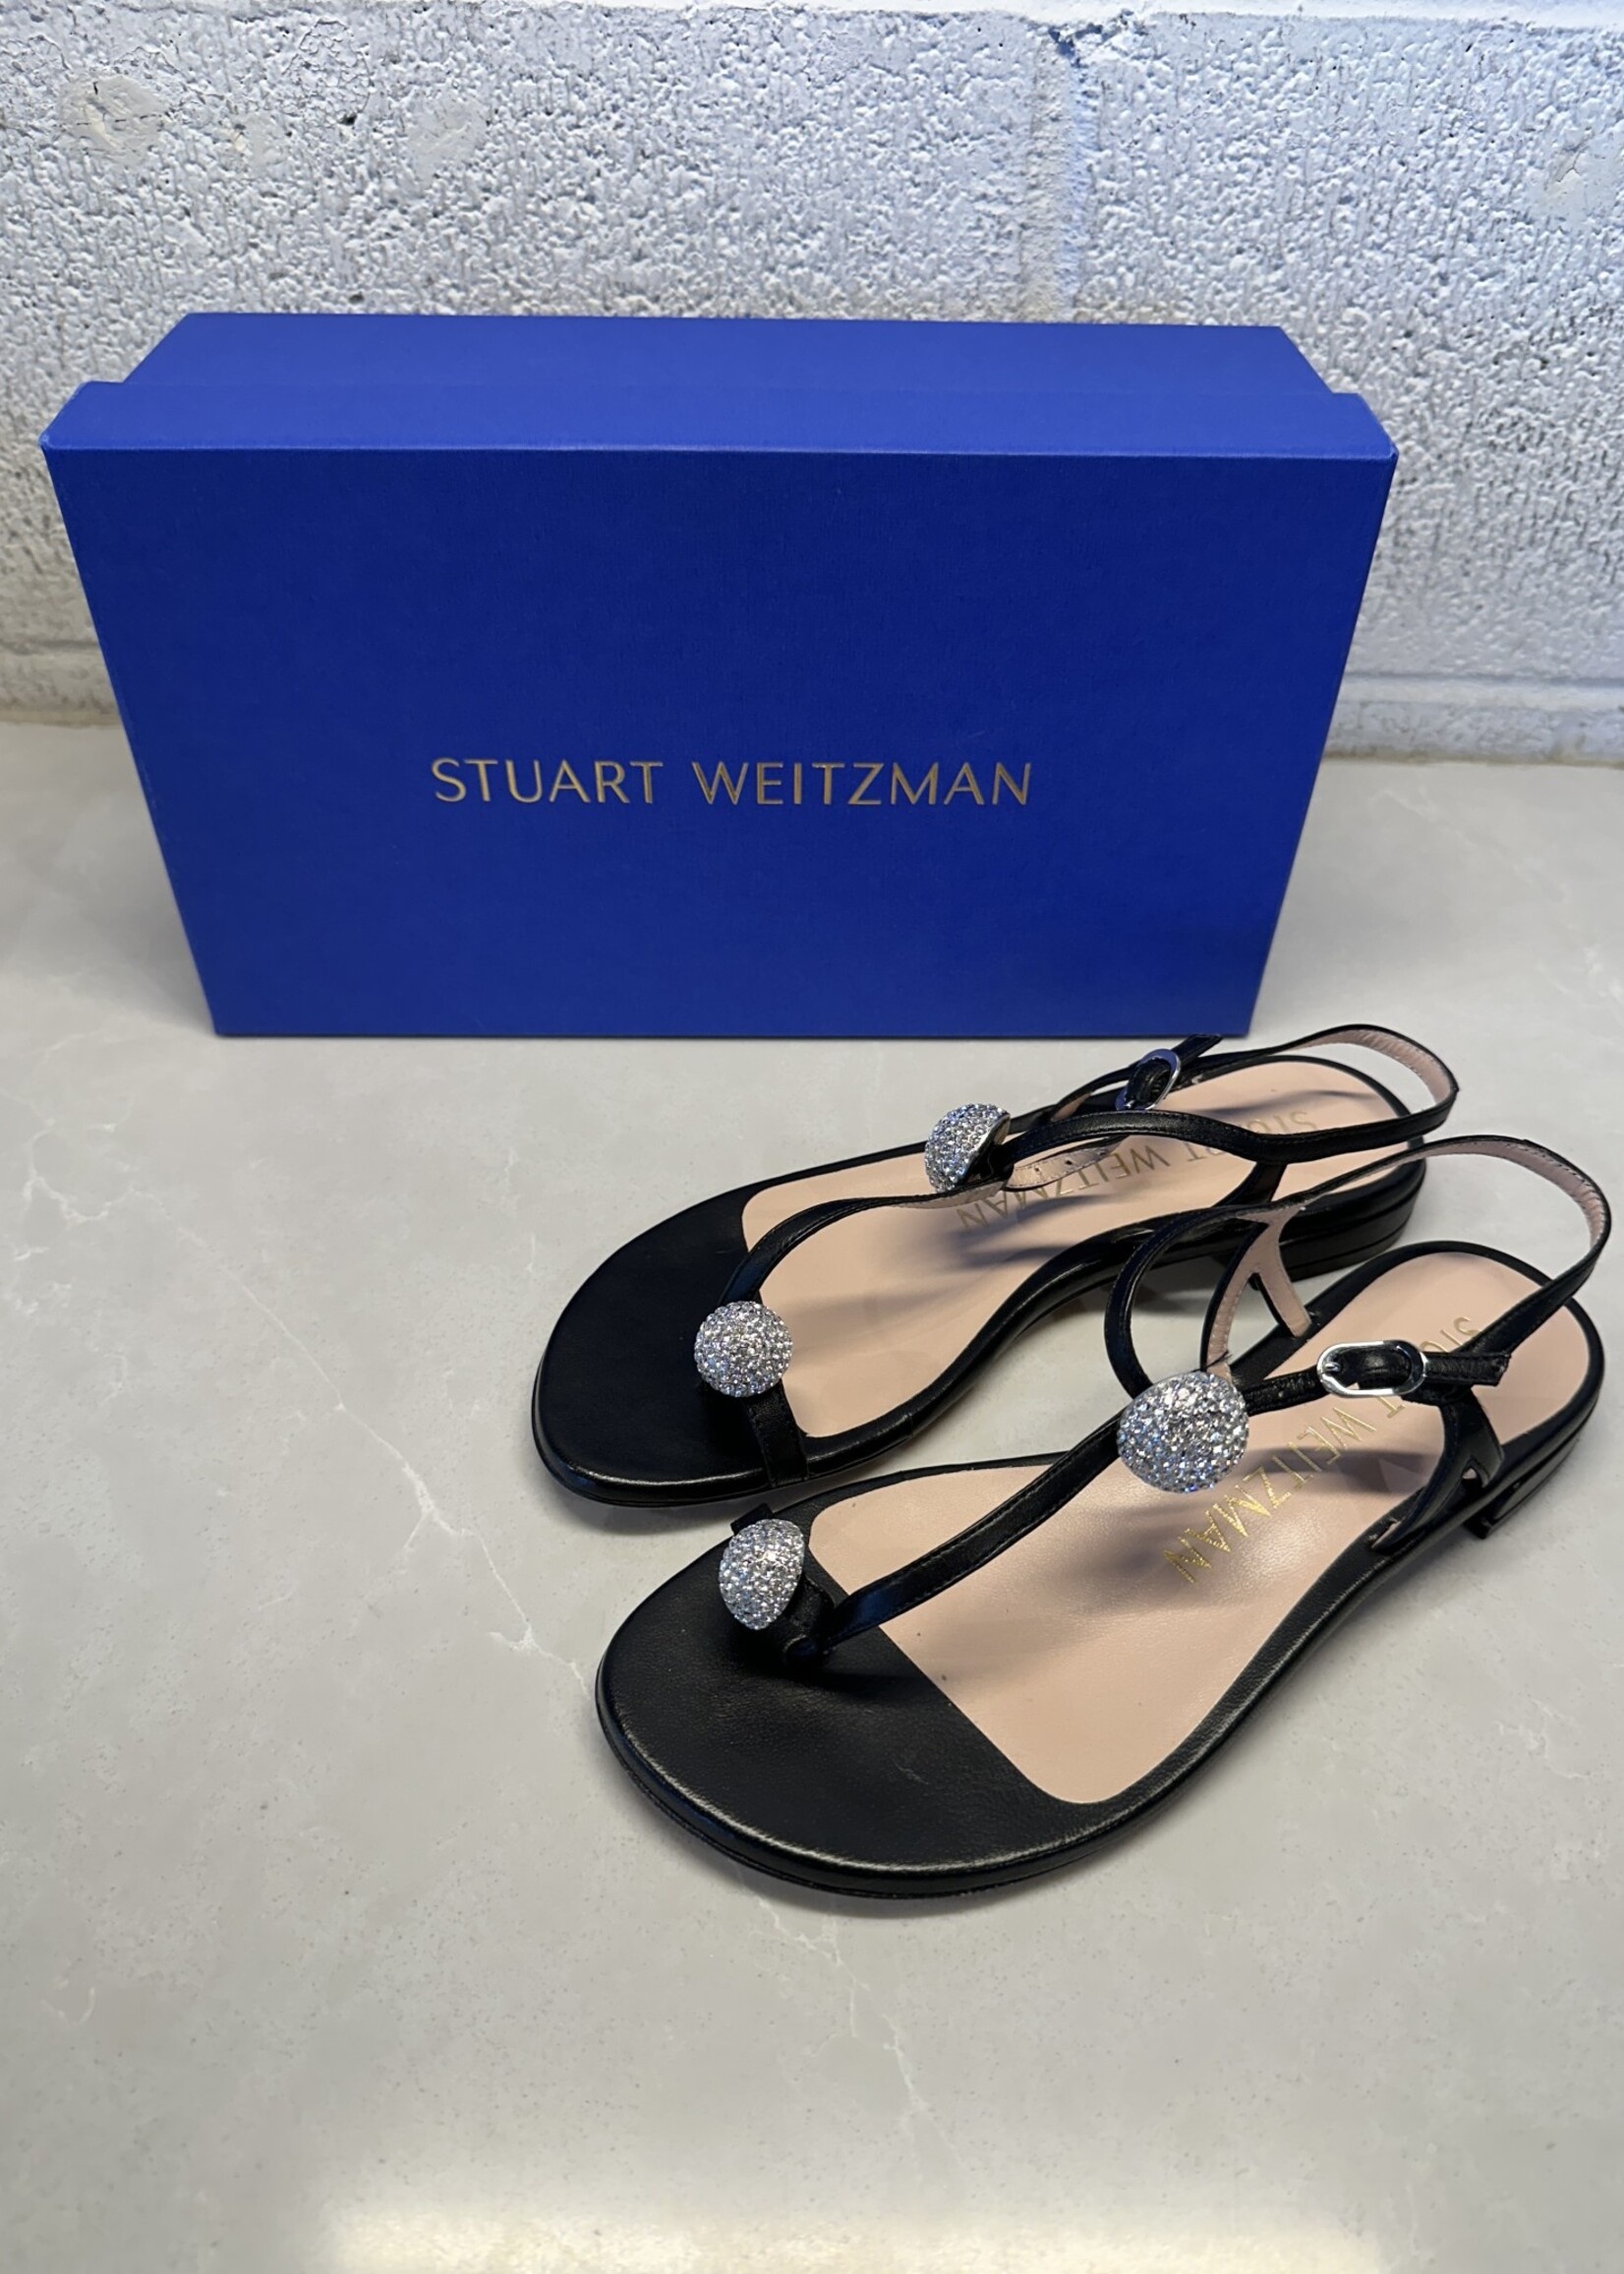 NWT Stuart Weitzman Black Rhinestone Sandals 5.5